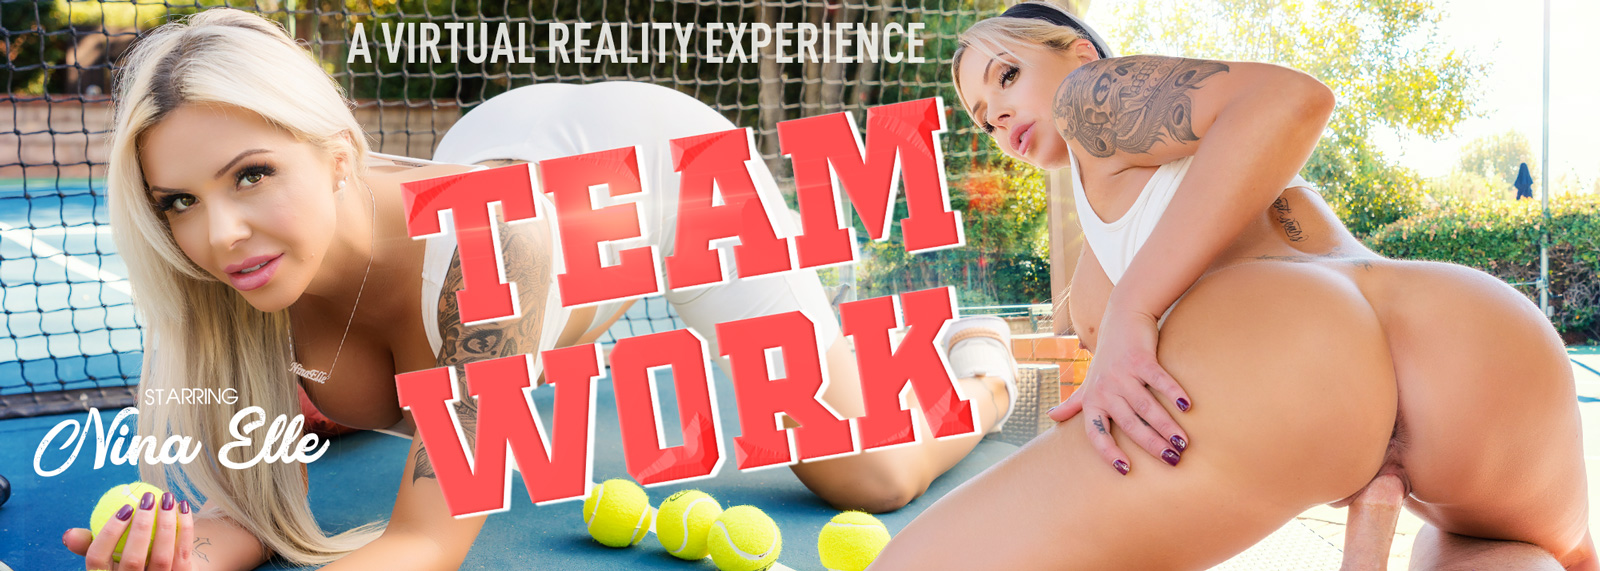 Team Work - VR Porn Video, Starring: Nina Elle